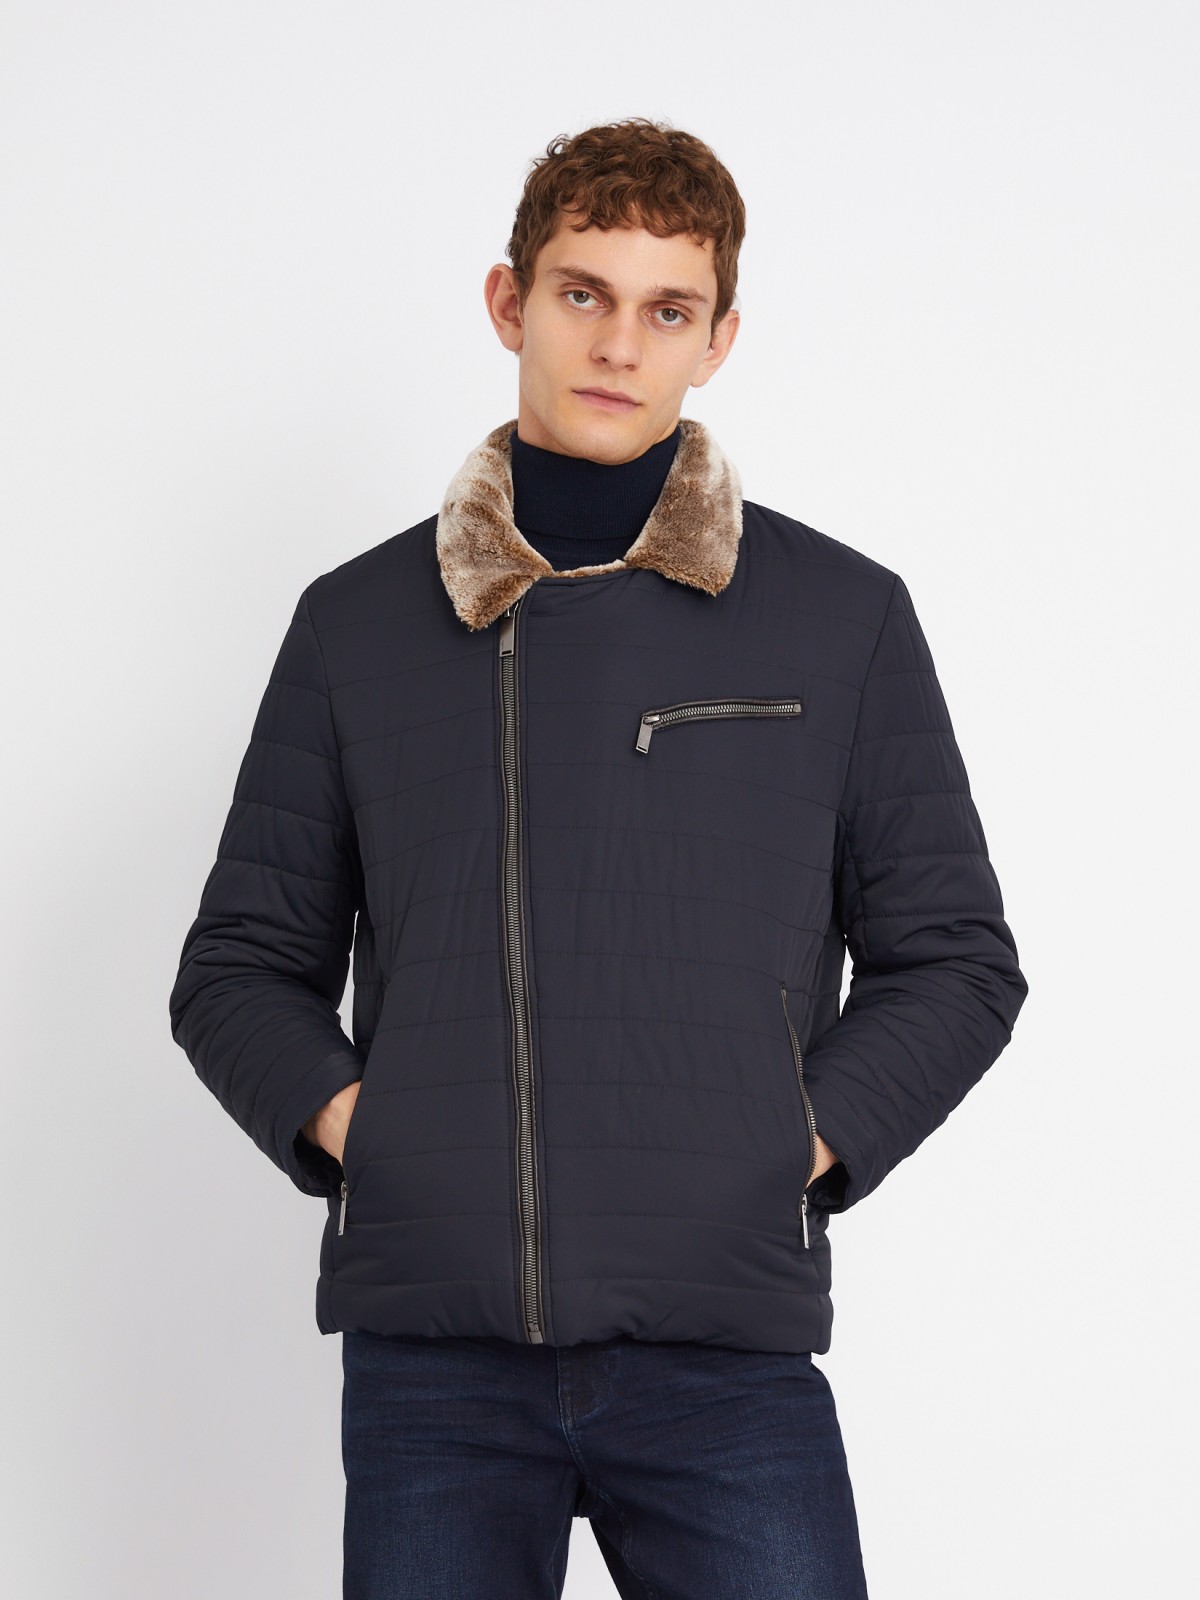 Тёплая стёганая куртка-косуха с подкладкой из экомеха на синтепоне zolla 013345150044, цвет темно-синий, размер L - фото 3